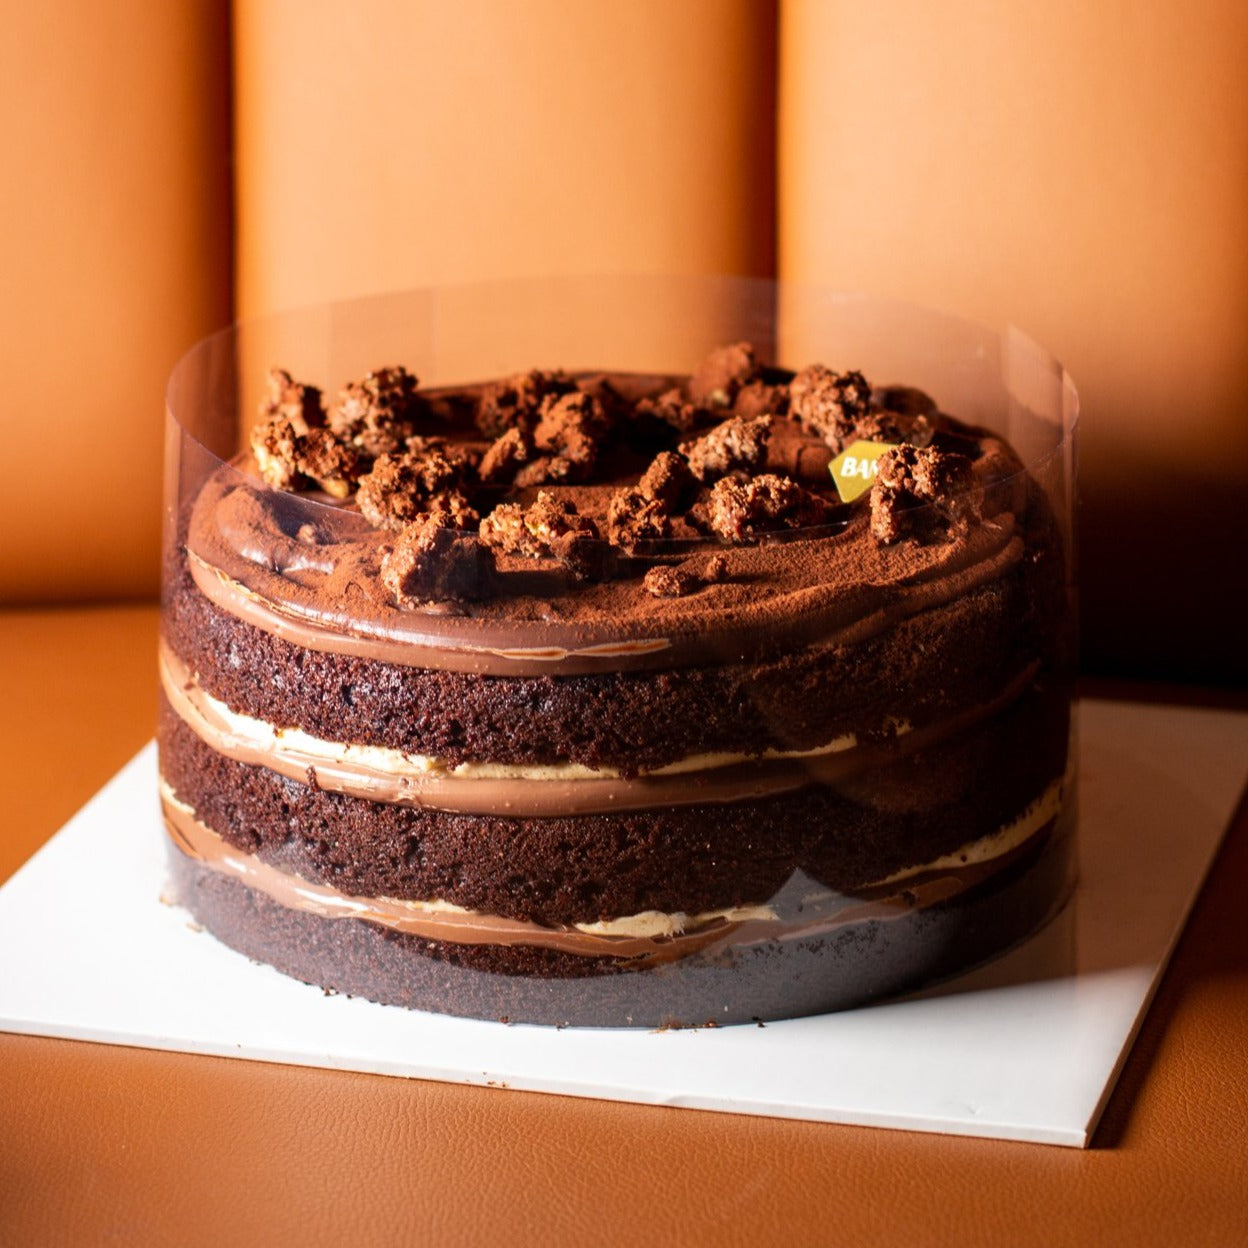 Chocolate Mud Sponge with Coconut Almond Praline Cream - Banksia Bakehouse 15 Serves